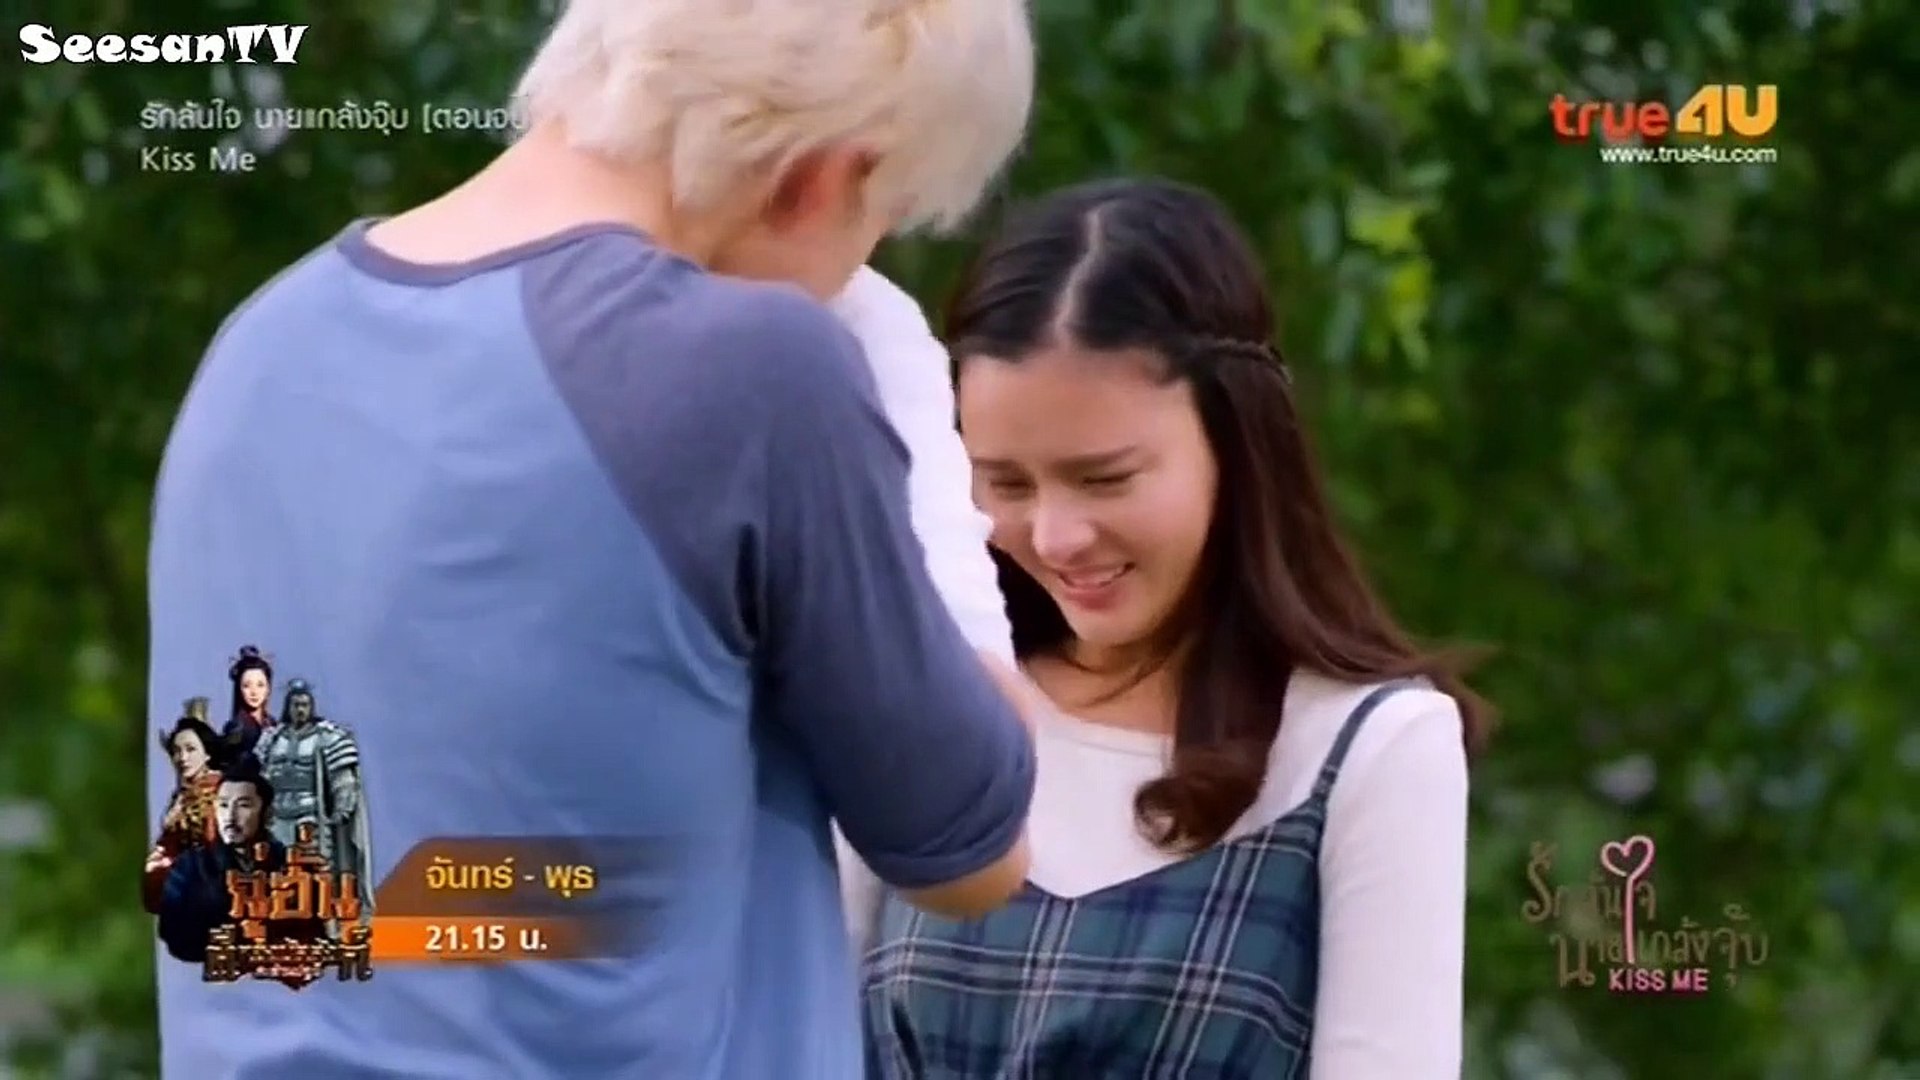 Kiss Me Episode 20 English Sub Thailand Drama 2015 Video Dailymotion